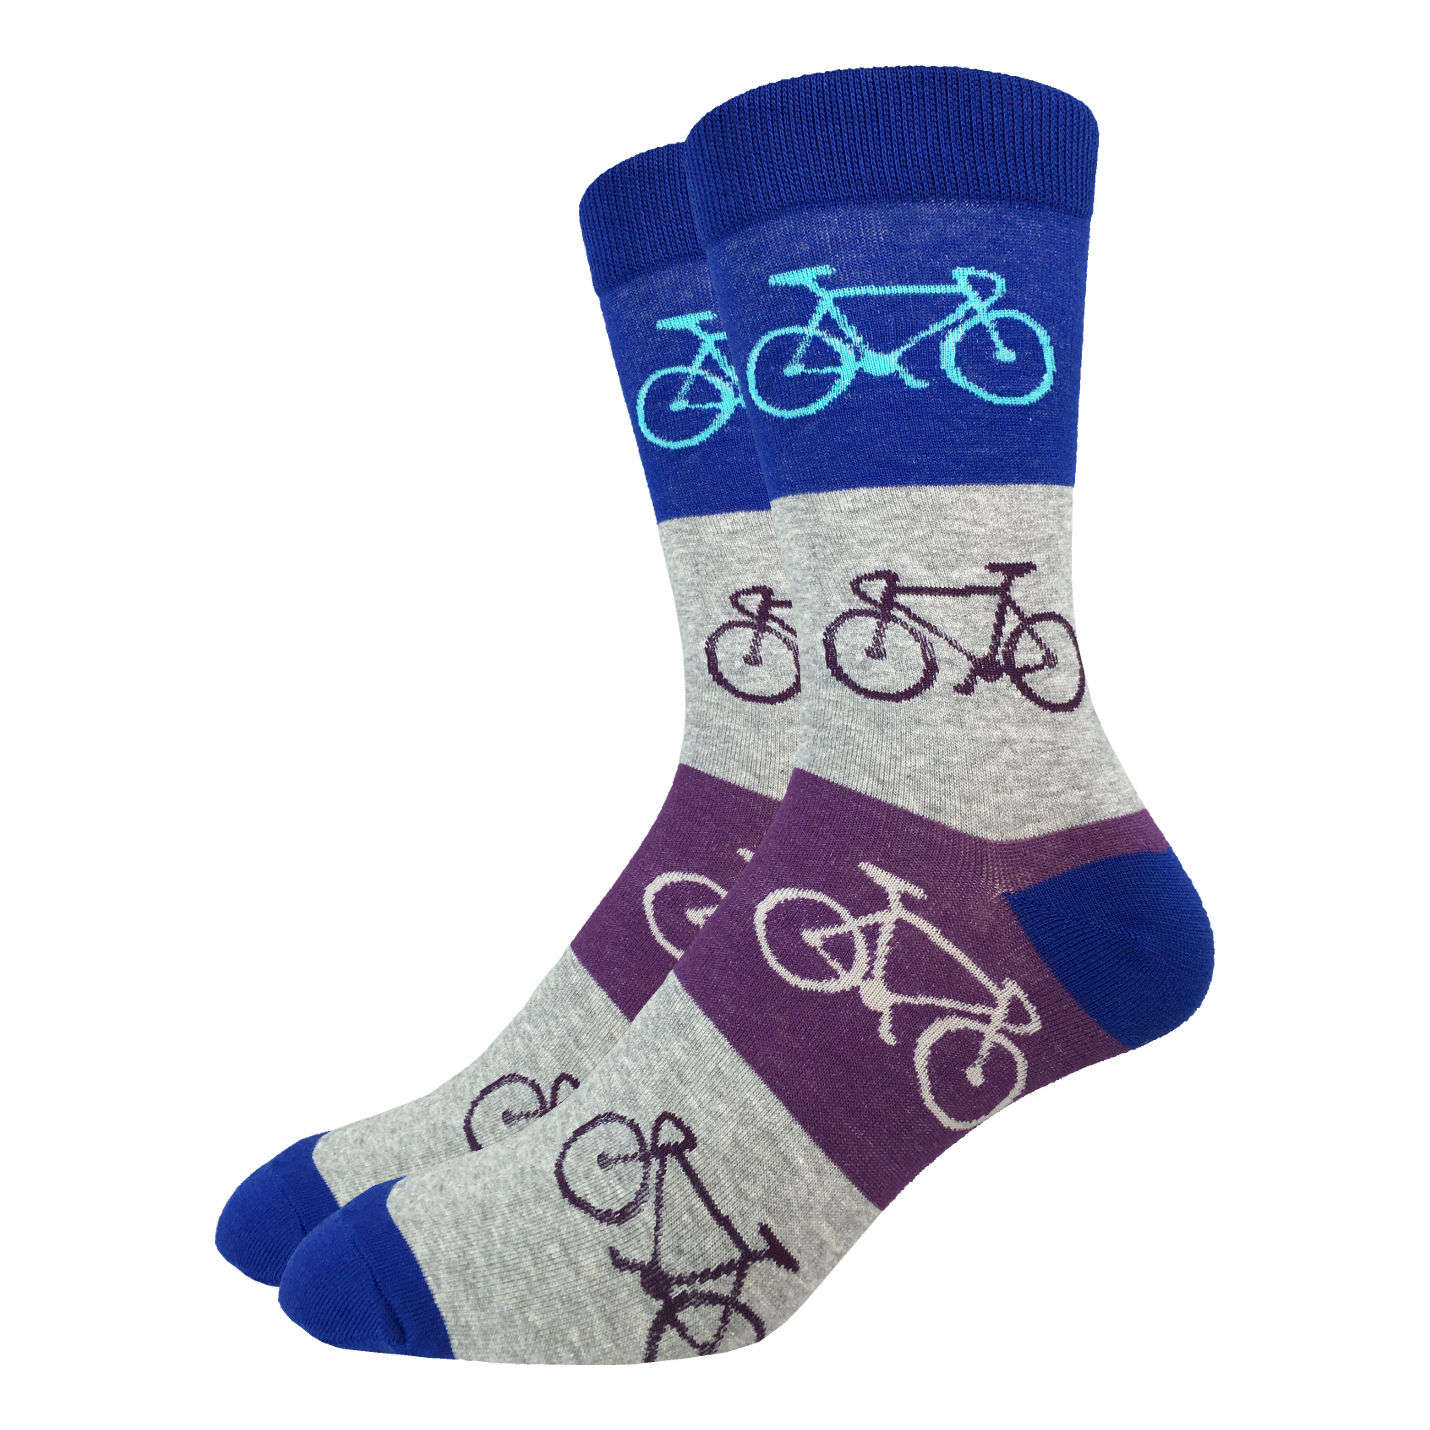 Good Luck Sock | Men's Crew | Blue & Grey Bikes Good Luck Sock - Oscar & Libby's